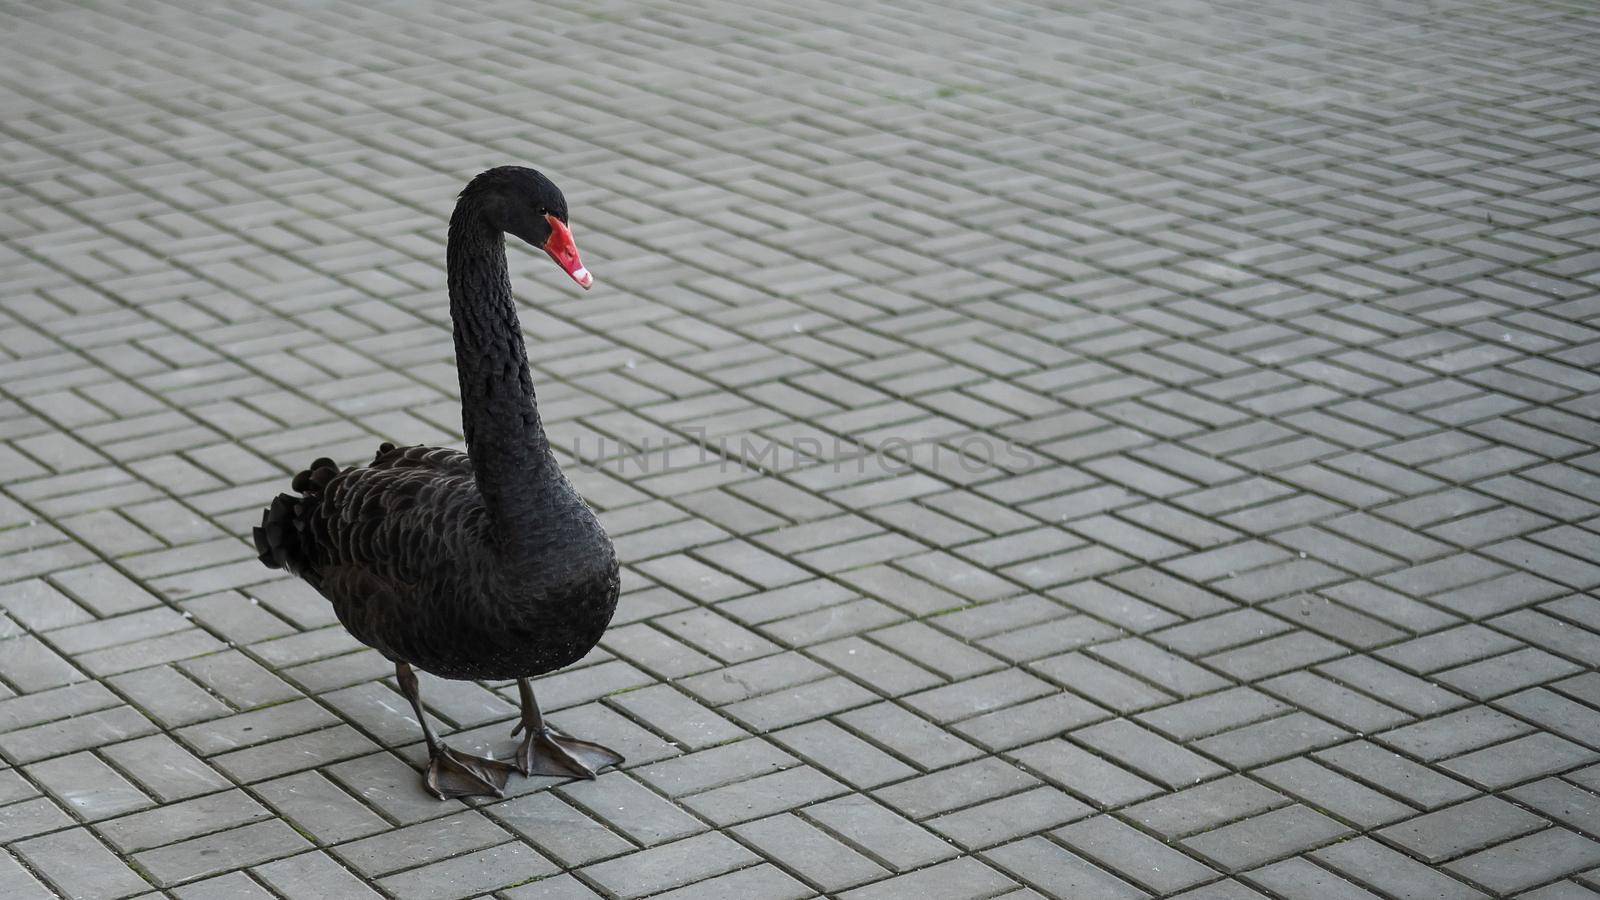 A black swan walks along the sidewalk. by mrwed54